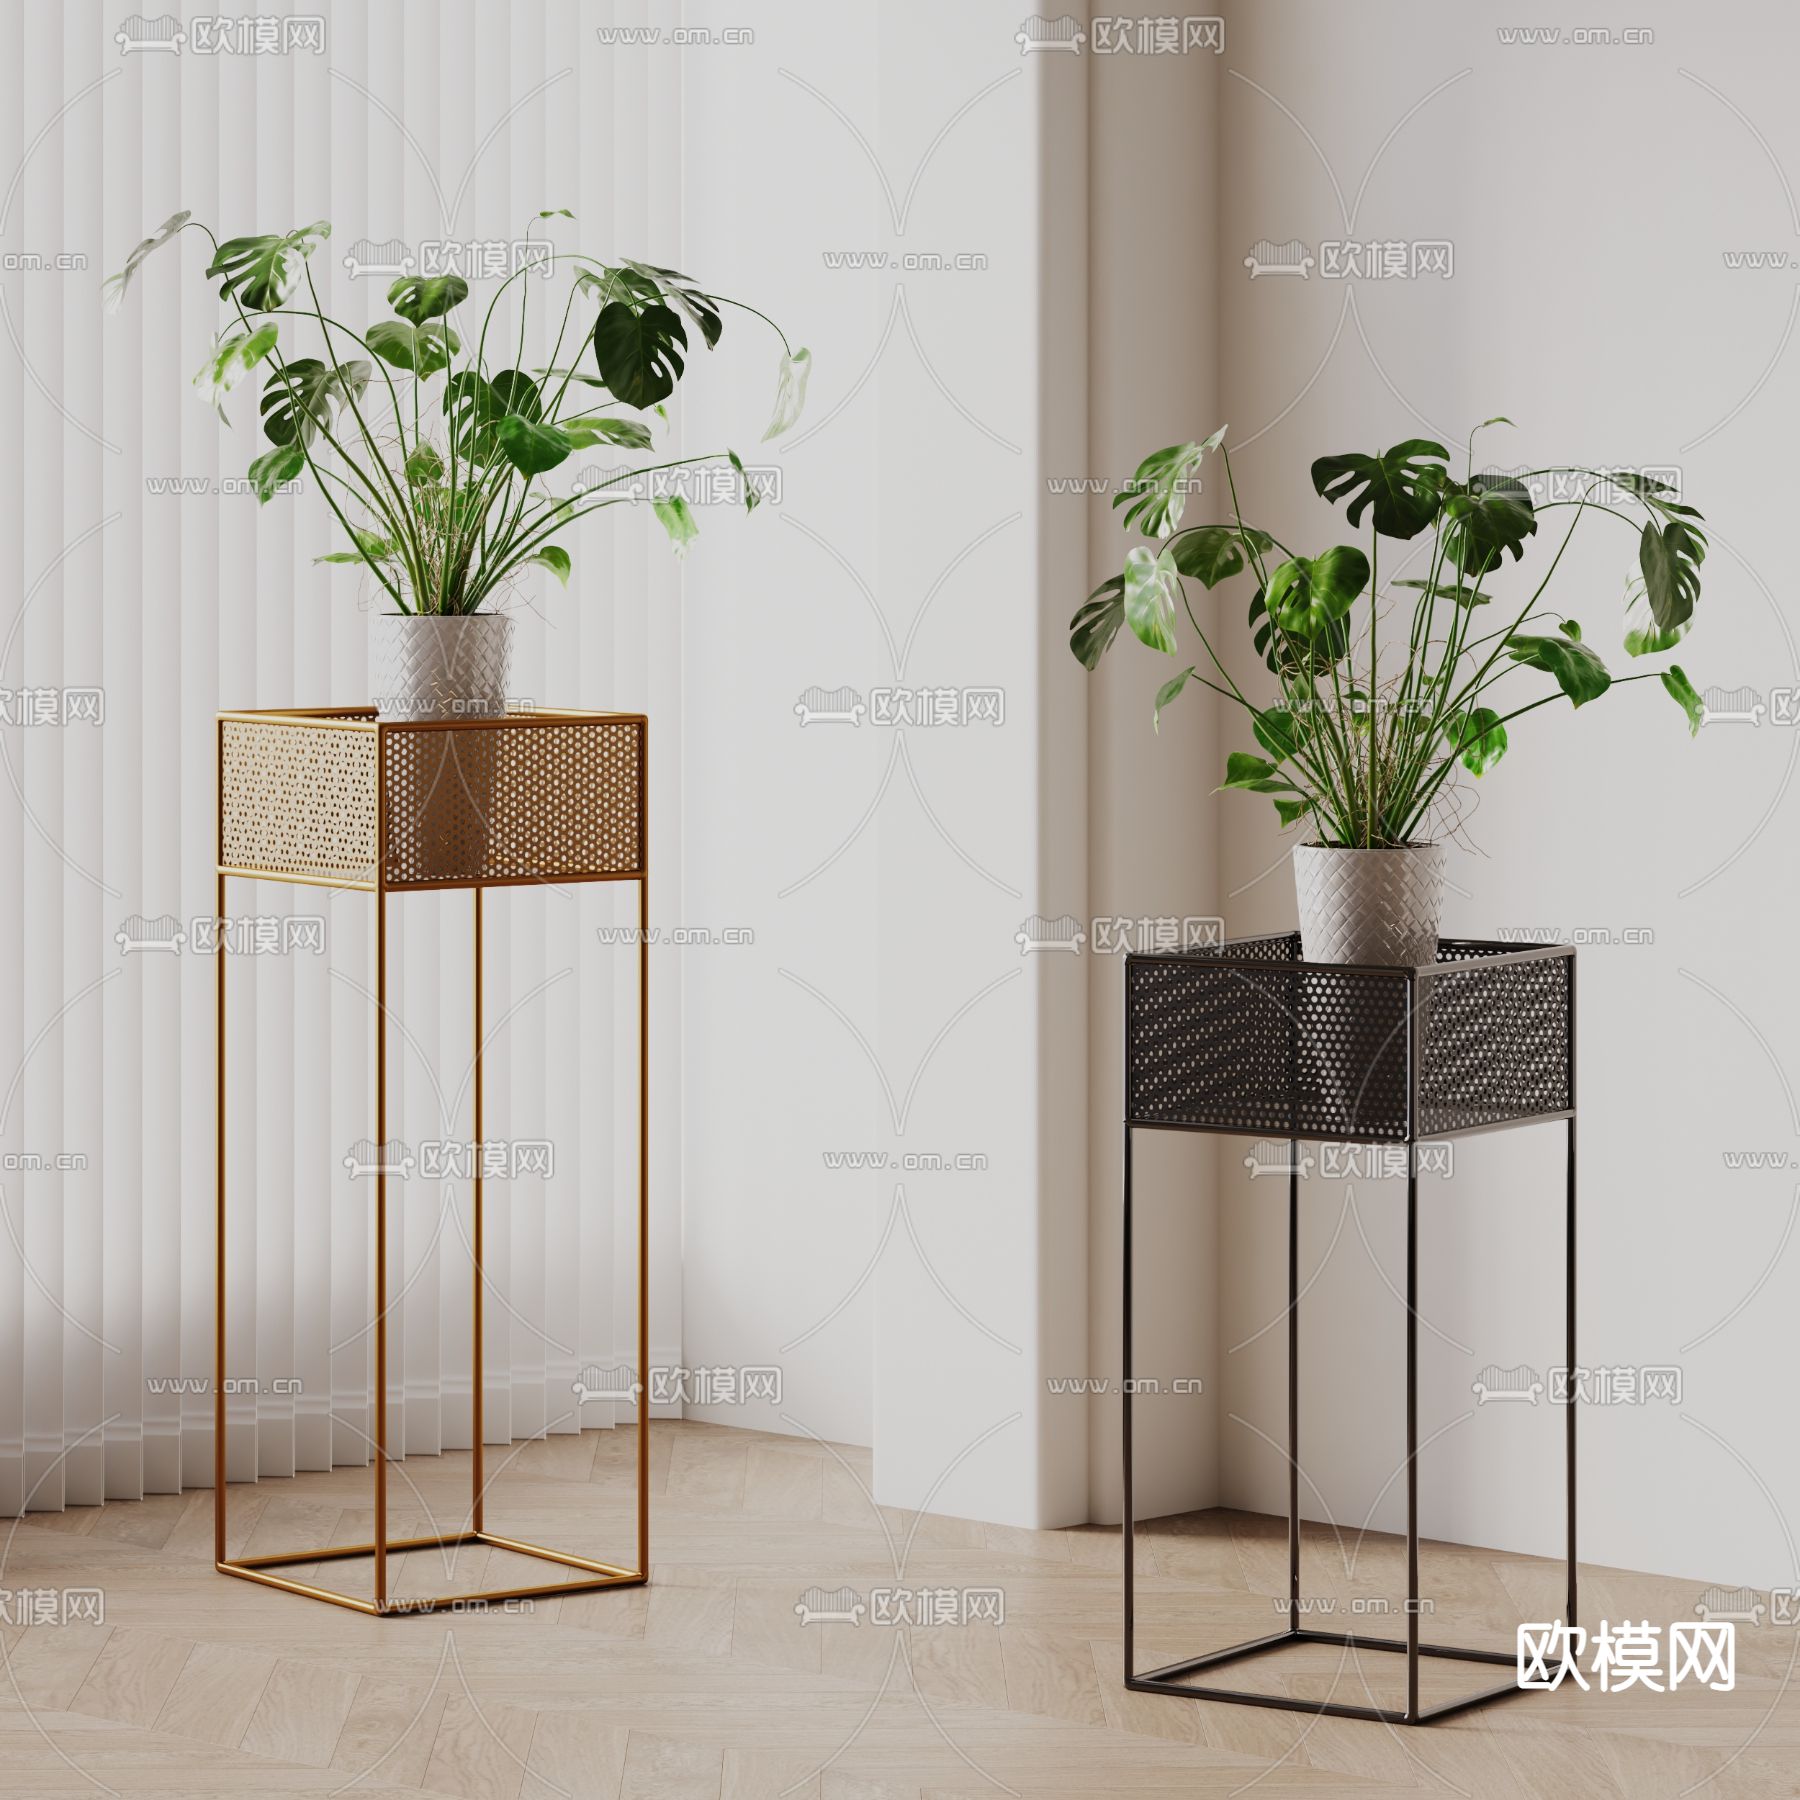 Plant – VRAY / CORONA – 3D MODEL – 420 - thumbnail 1